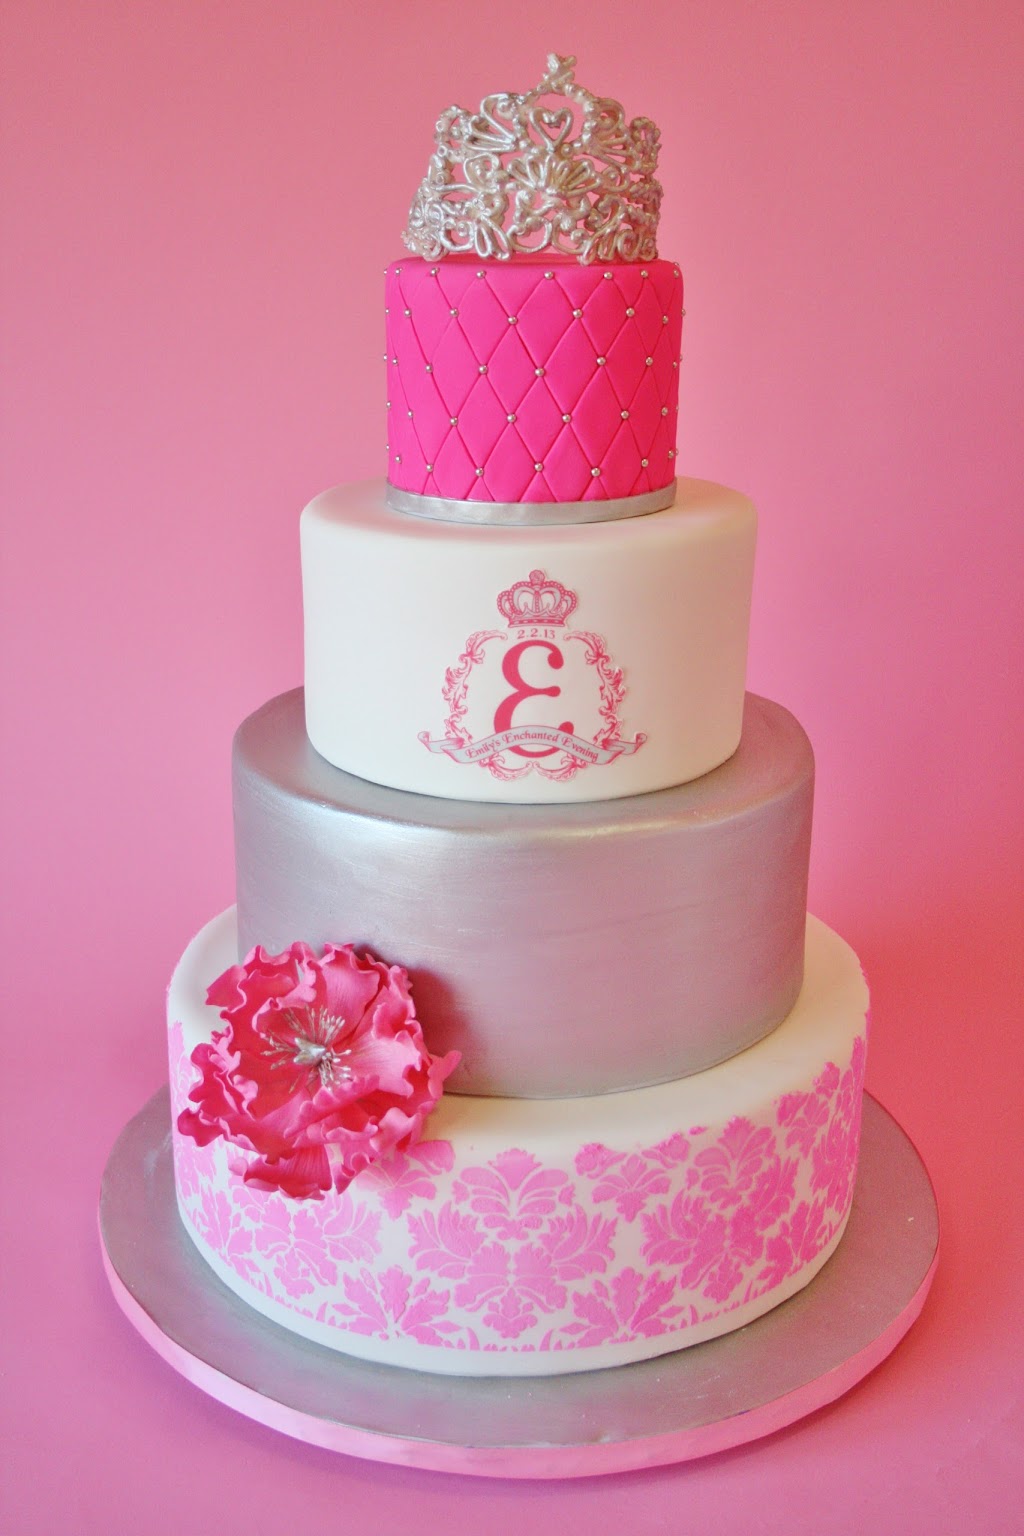 Sweet Grace, Cake Designs | 312 St Nicholas Ave, Haworth, NJ 07641 | Phone: (917) 533-7425